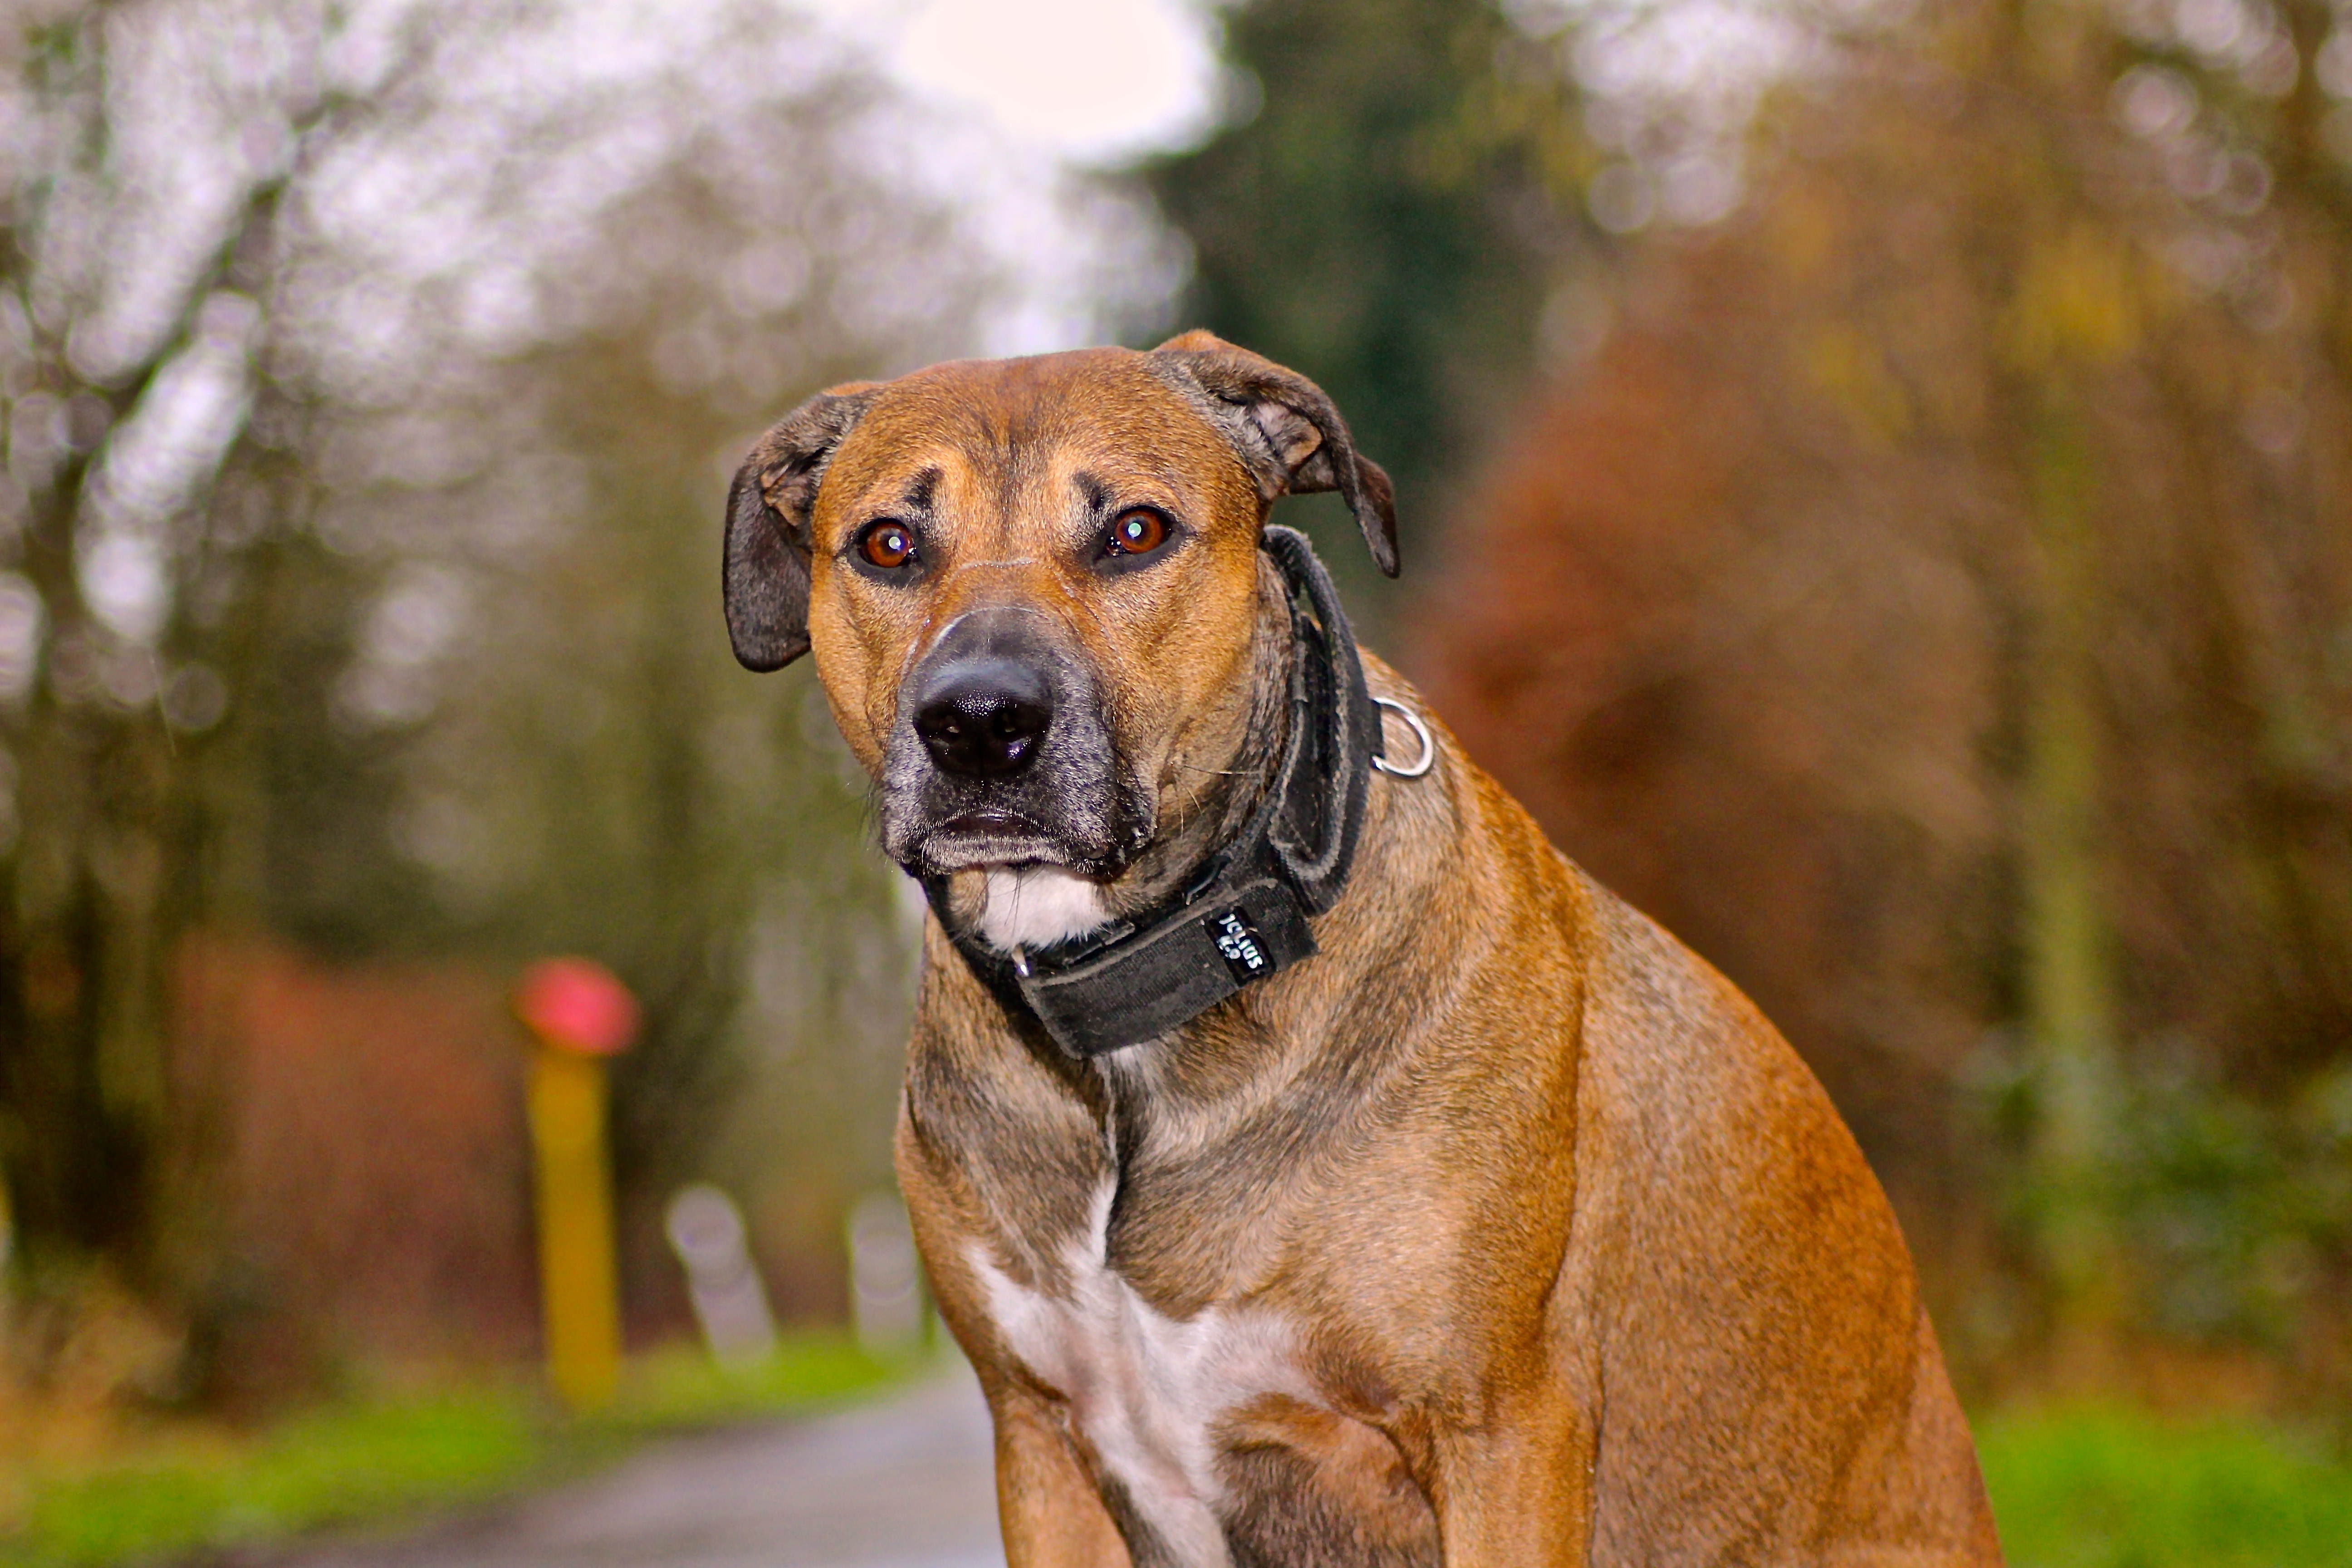 tilt shift lens photography of brown and white short coated medium size dog